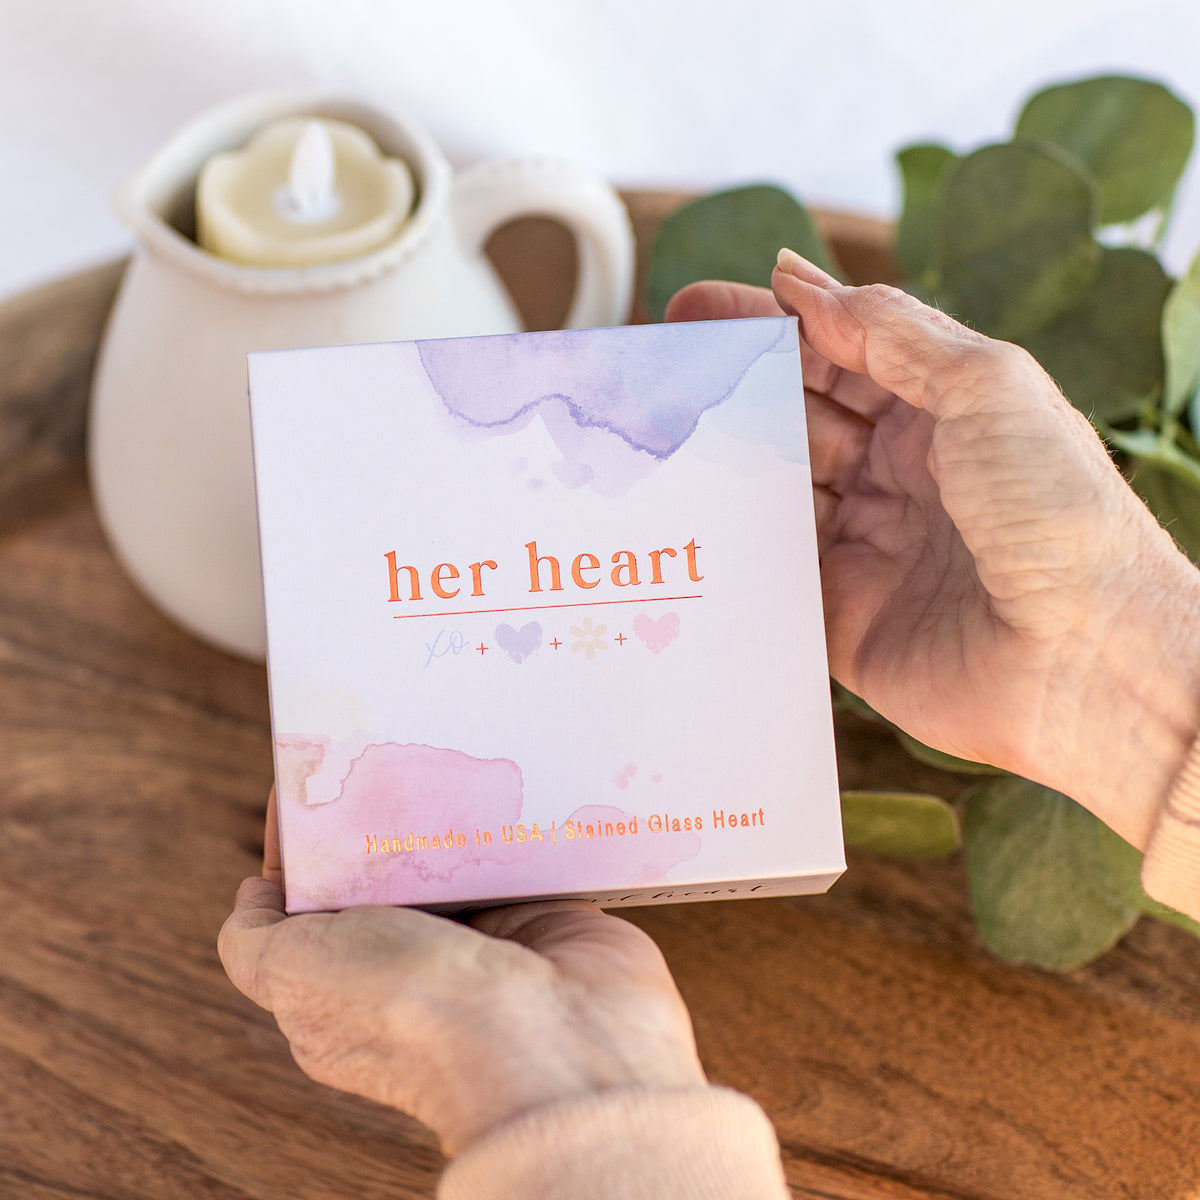 Her Heart gift box being held in hands.